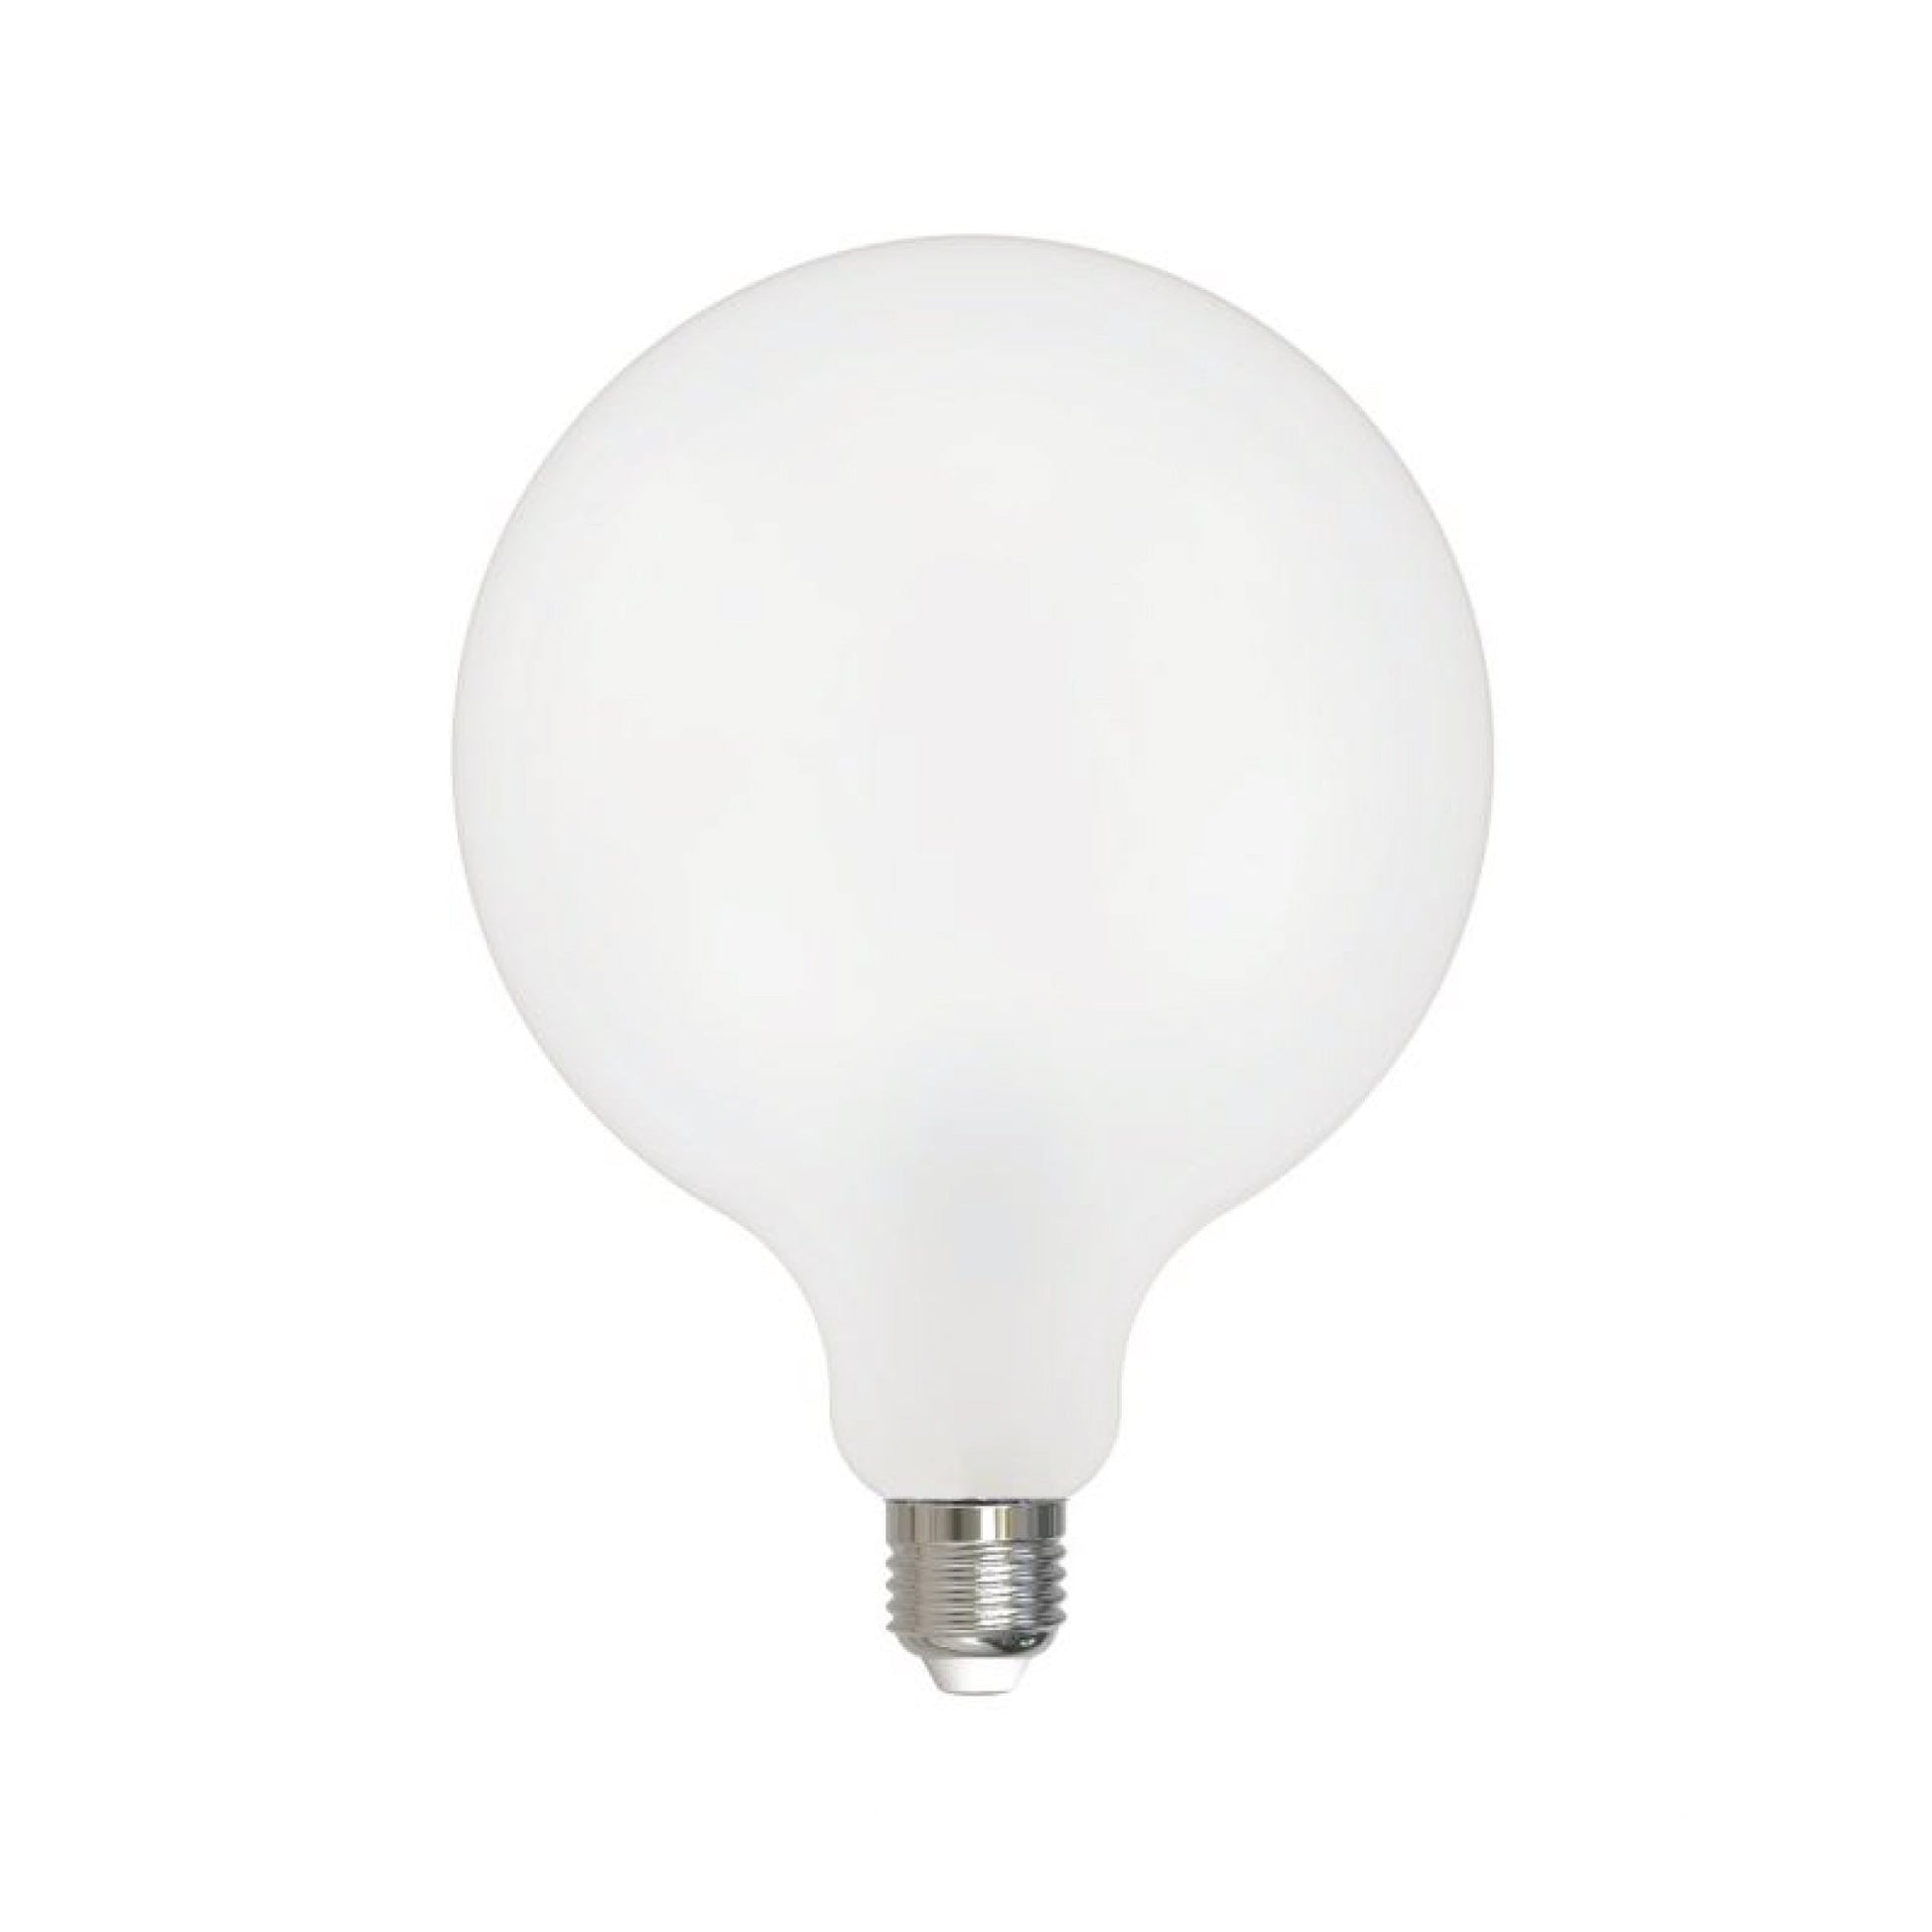 Craftmade 7-Watt G50 Frosted Finish, E26 Medium Base, 8.4" M.O.L., 3000K Warm White LED Light Bulb